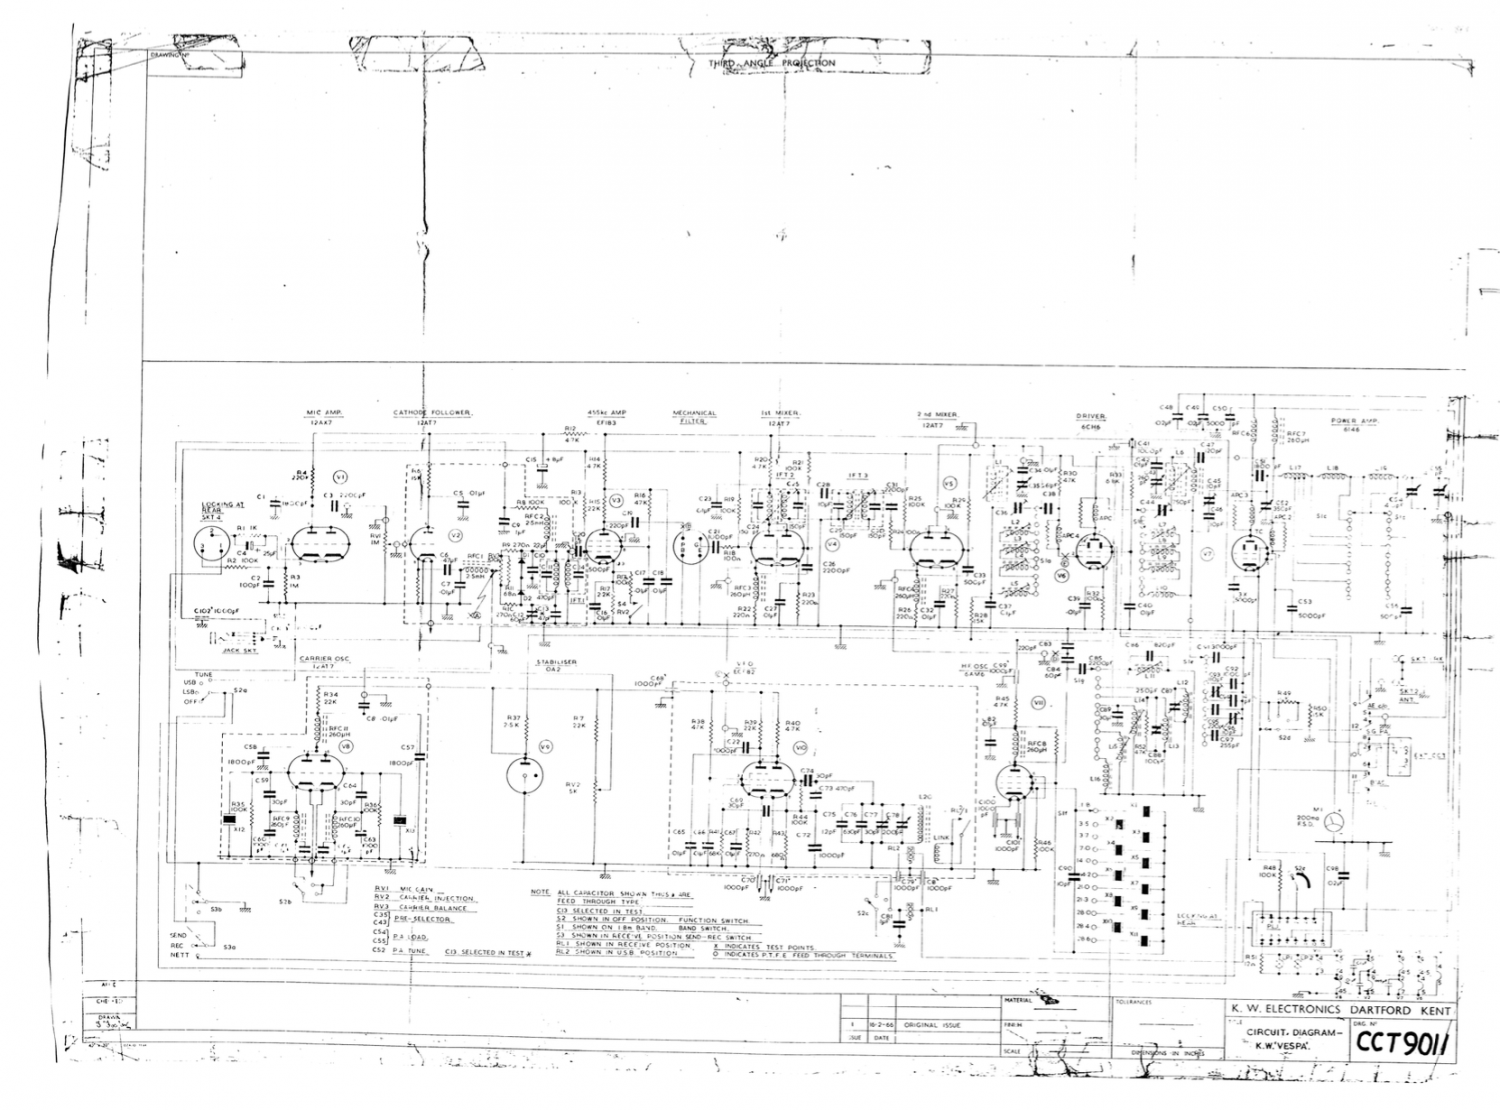 KW Vespa Mk II - Schematic Diagram CCT9011 Issue 1 (16th February 1966)